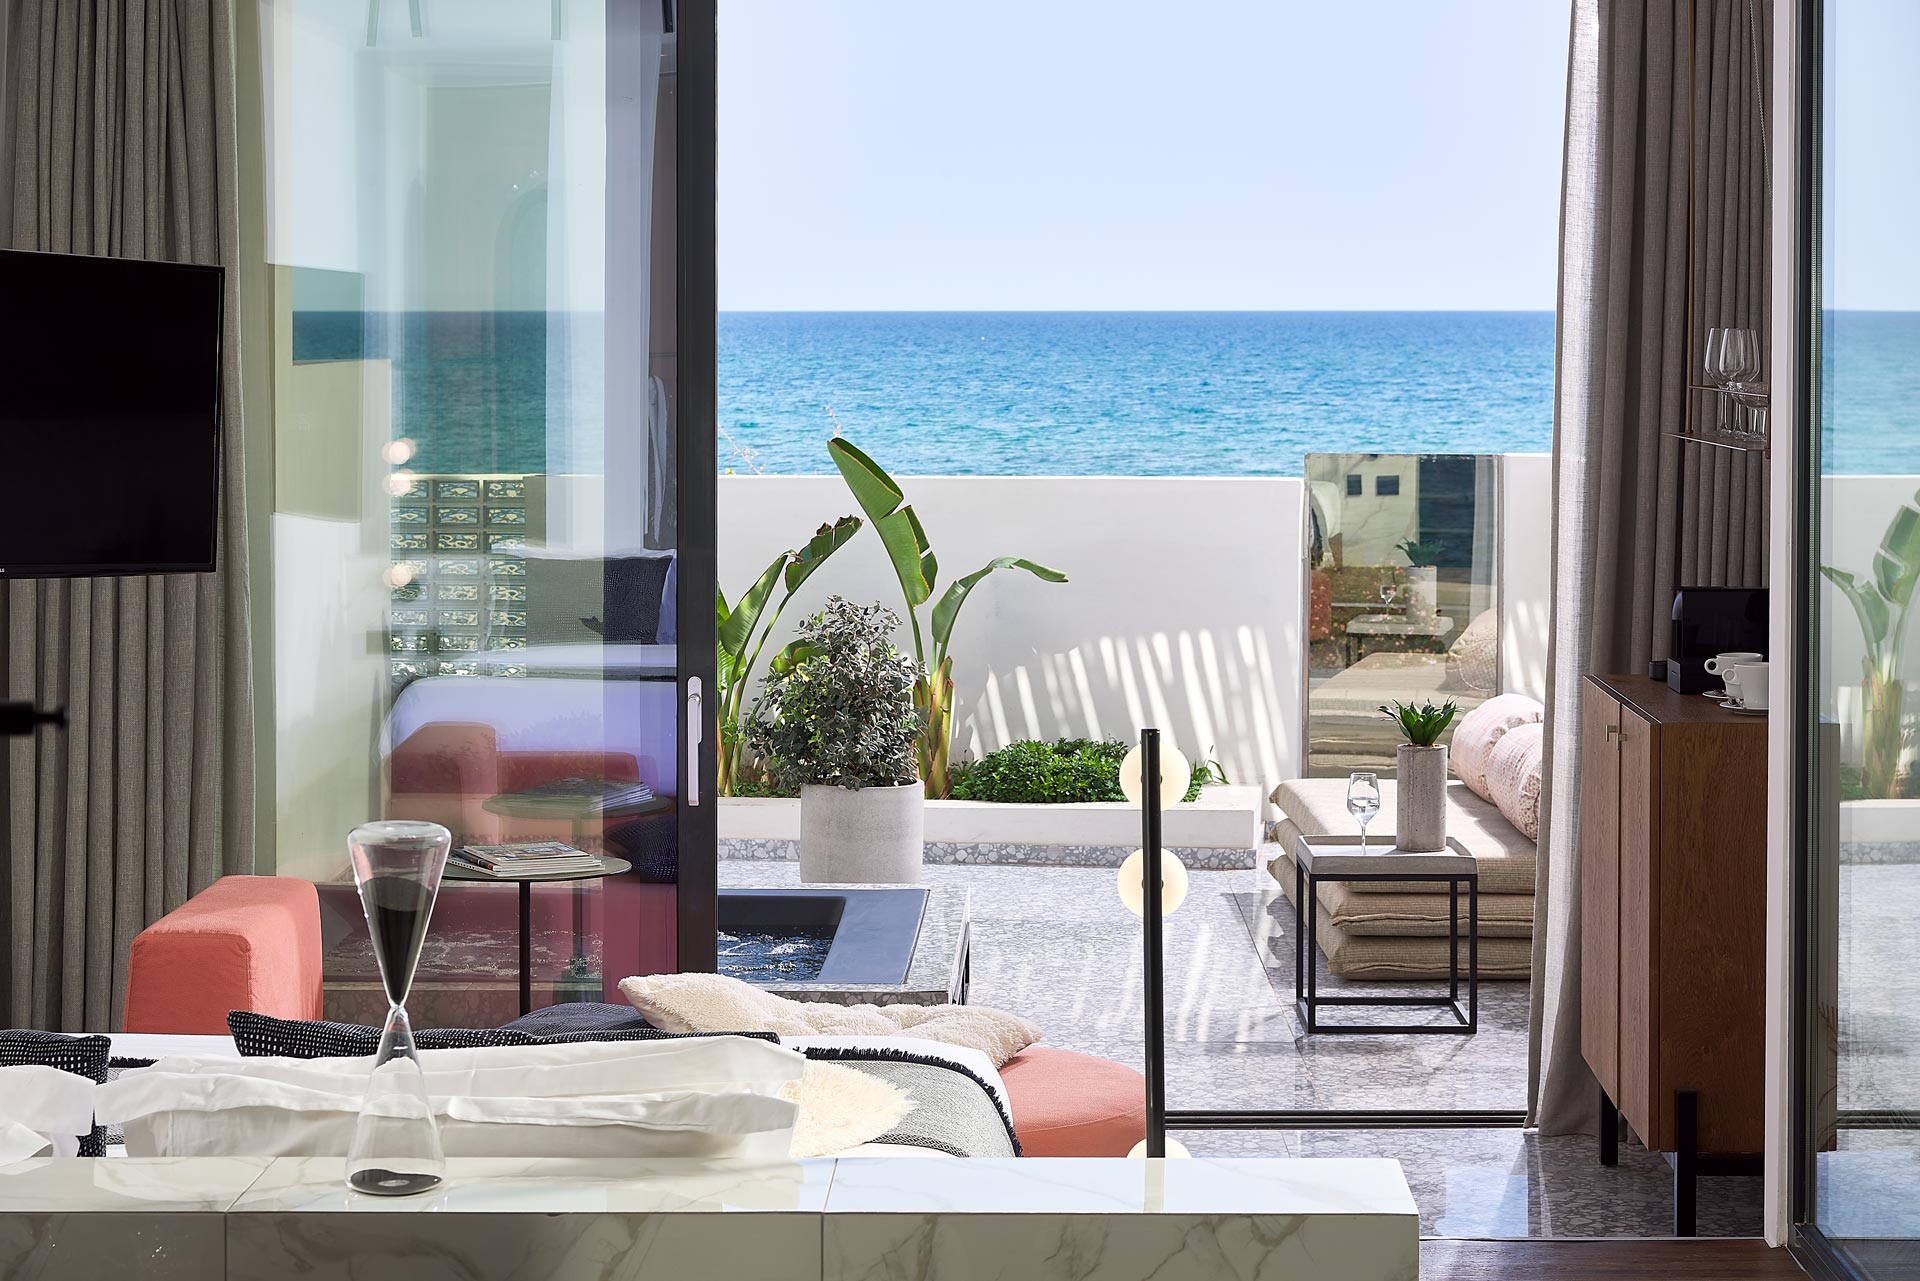 Dyo Suites Luxury Boutique Hotel Rethymno Crete - Palladium Suite